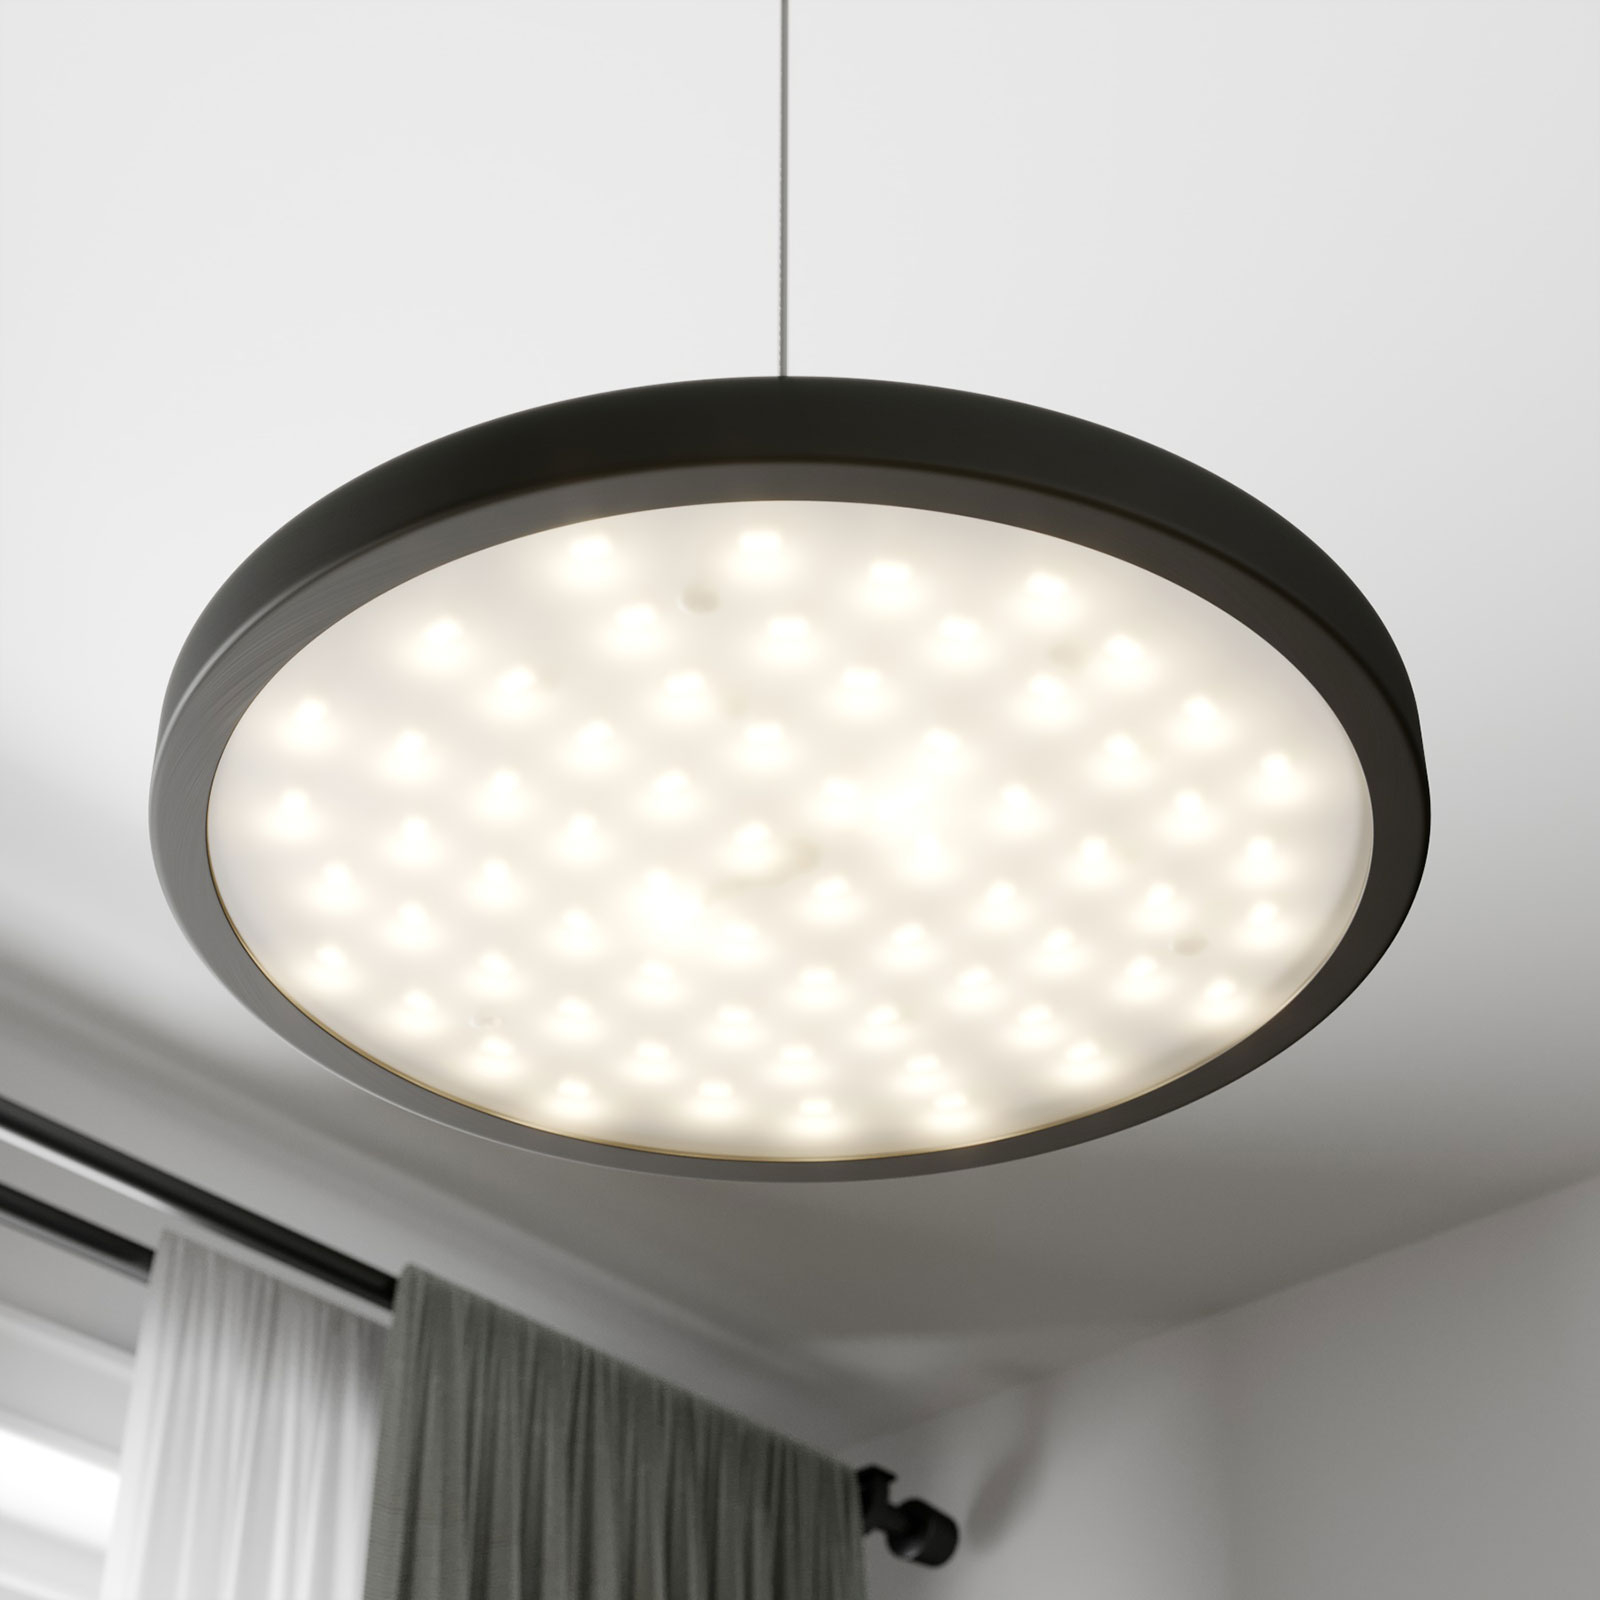 Quitani LED-Pendellampe Gion, 1-flammig, alu/schwarz